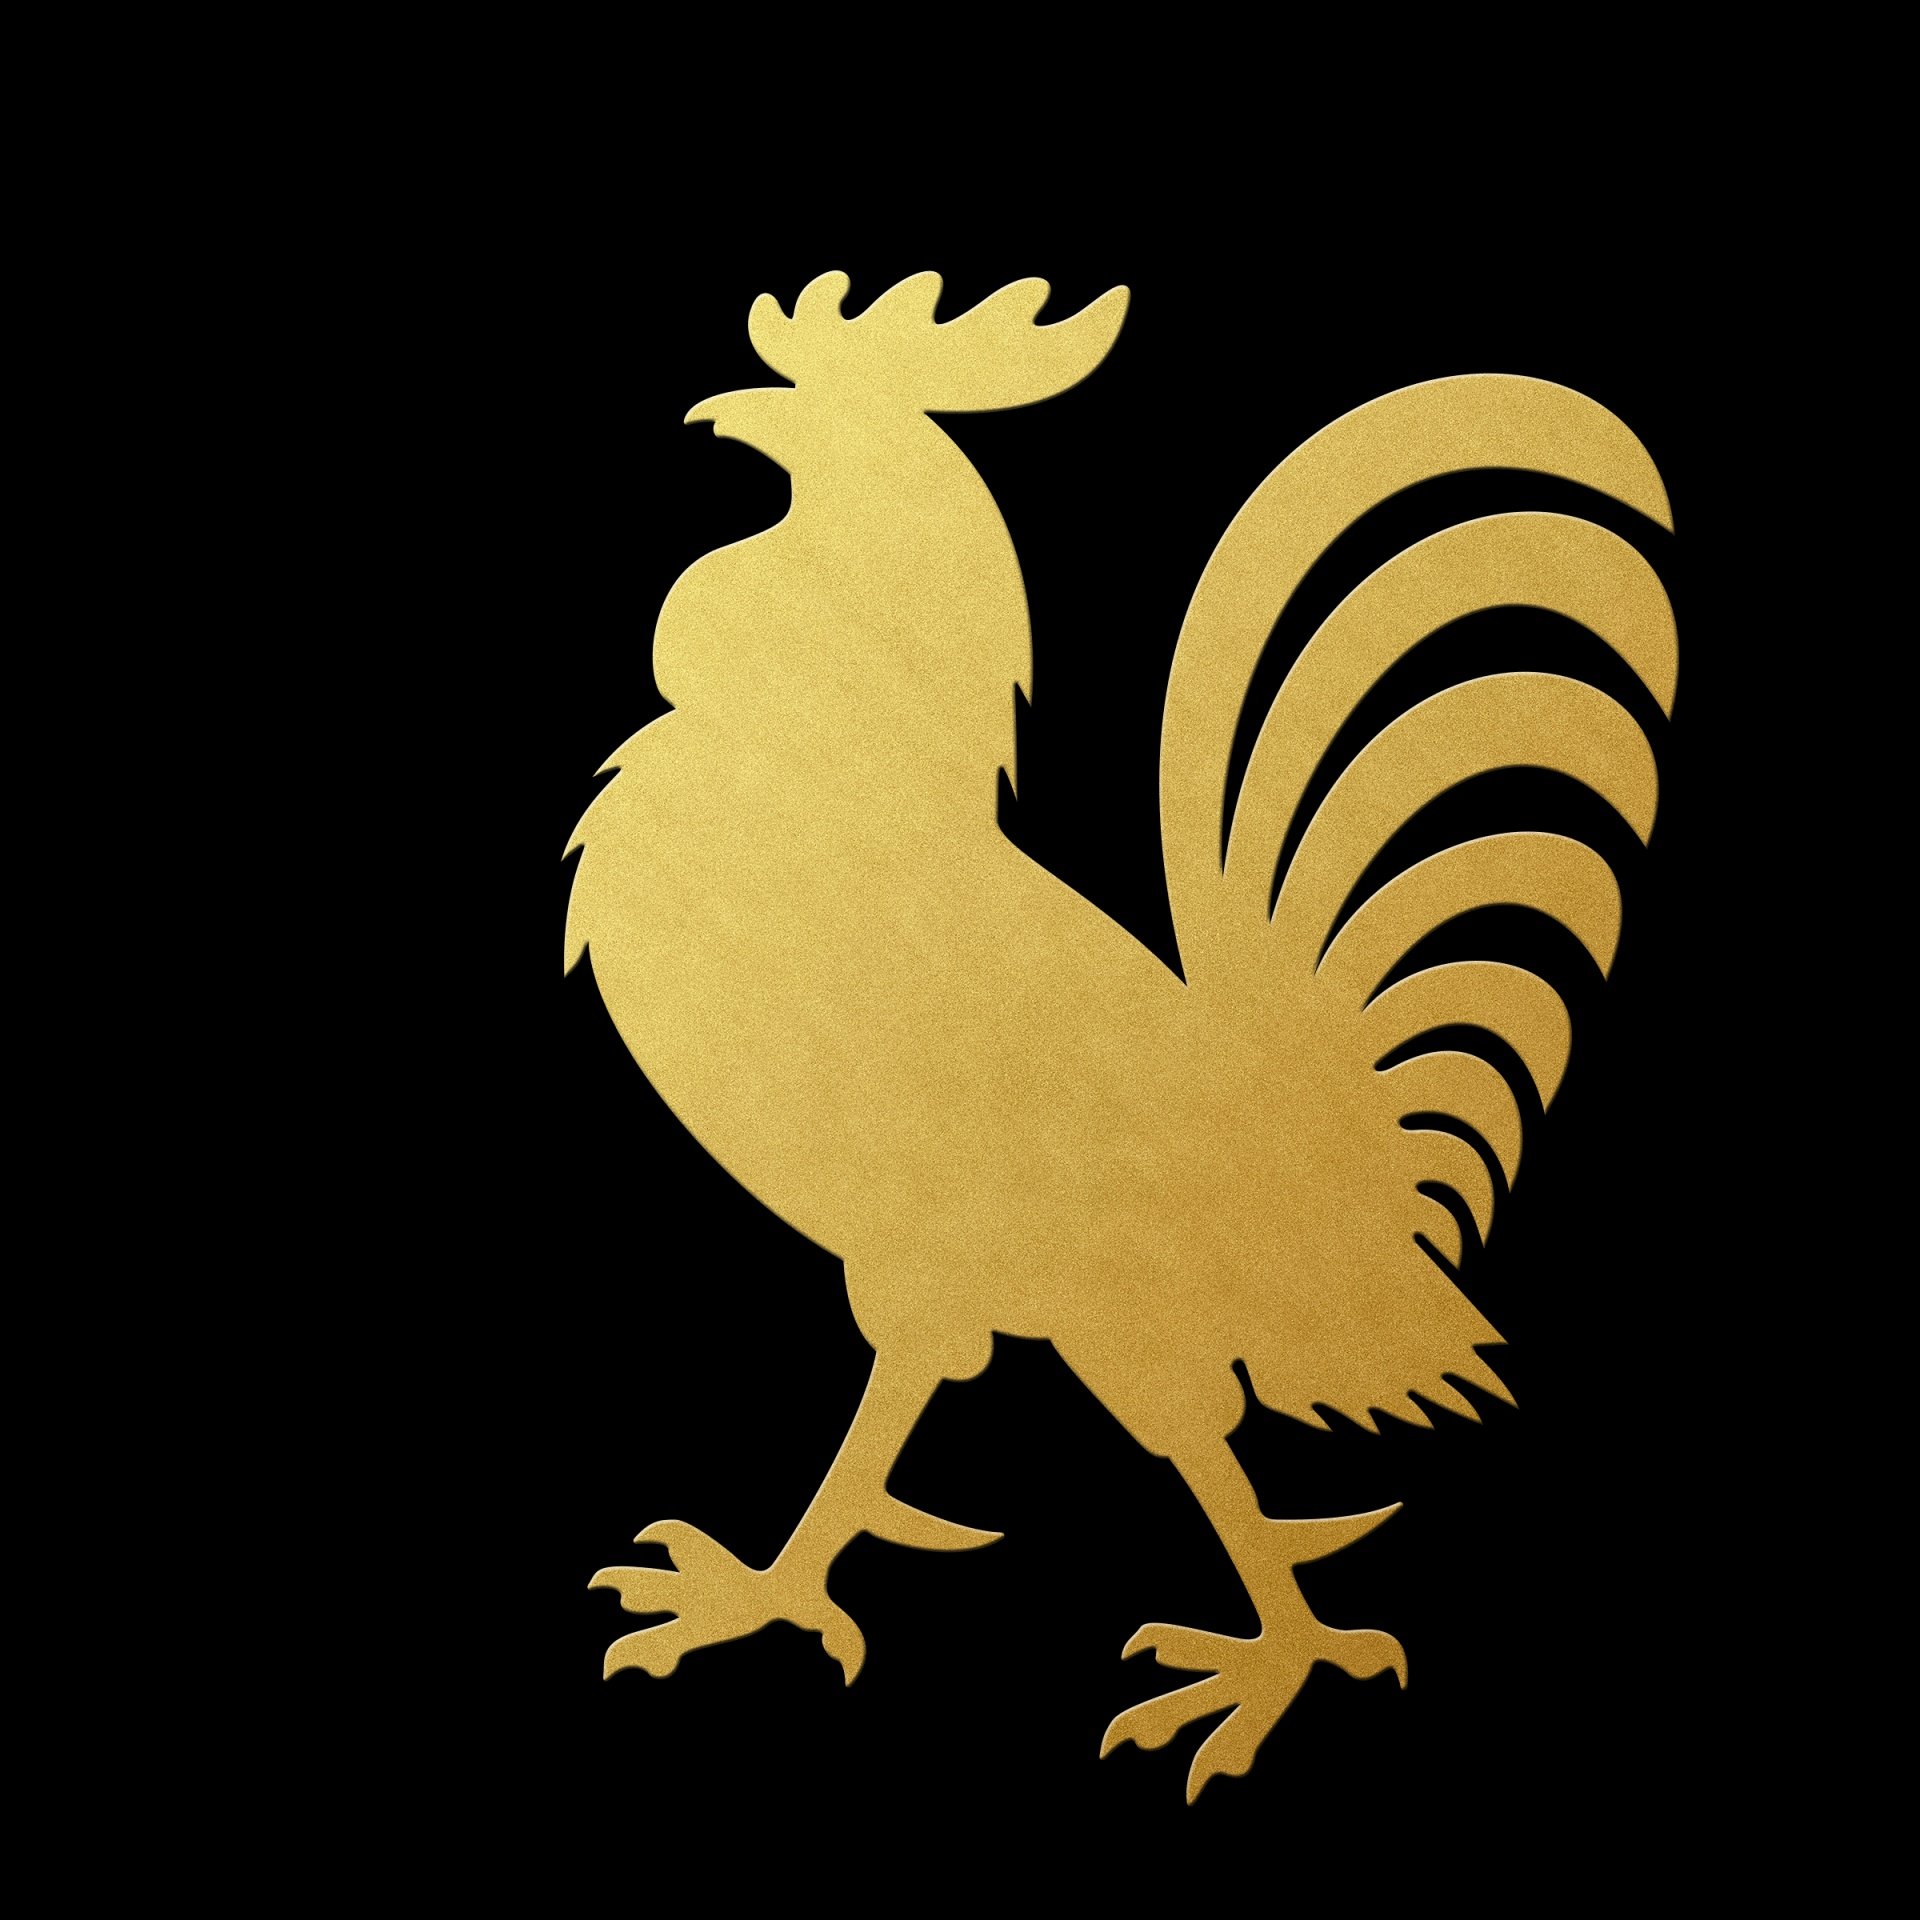 Gold cock. Золотой петух. Золотой петушок логотип. Золотистый петух. Герб с петухом.